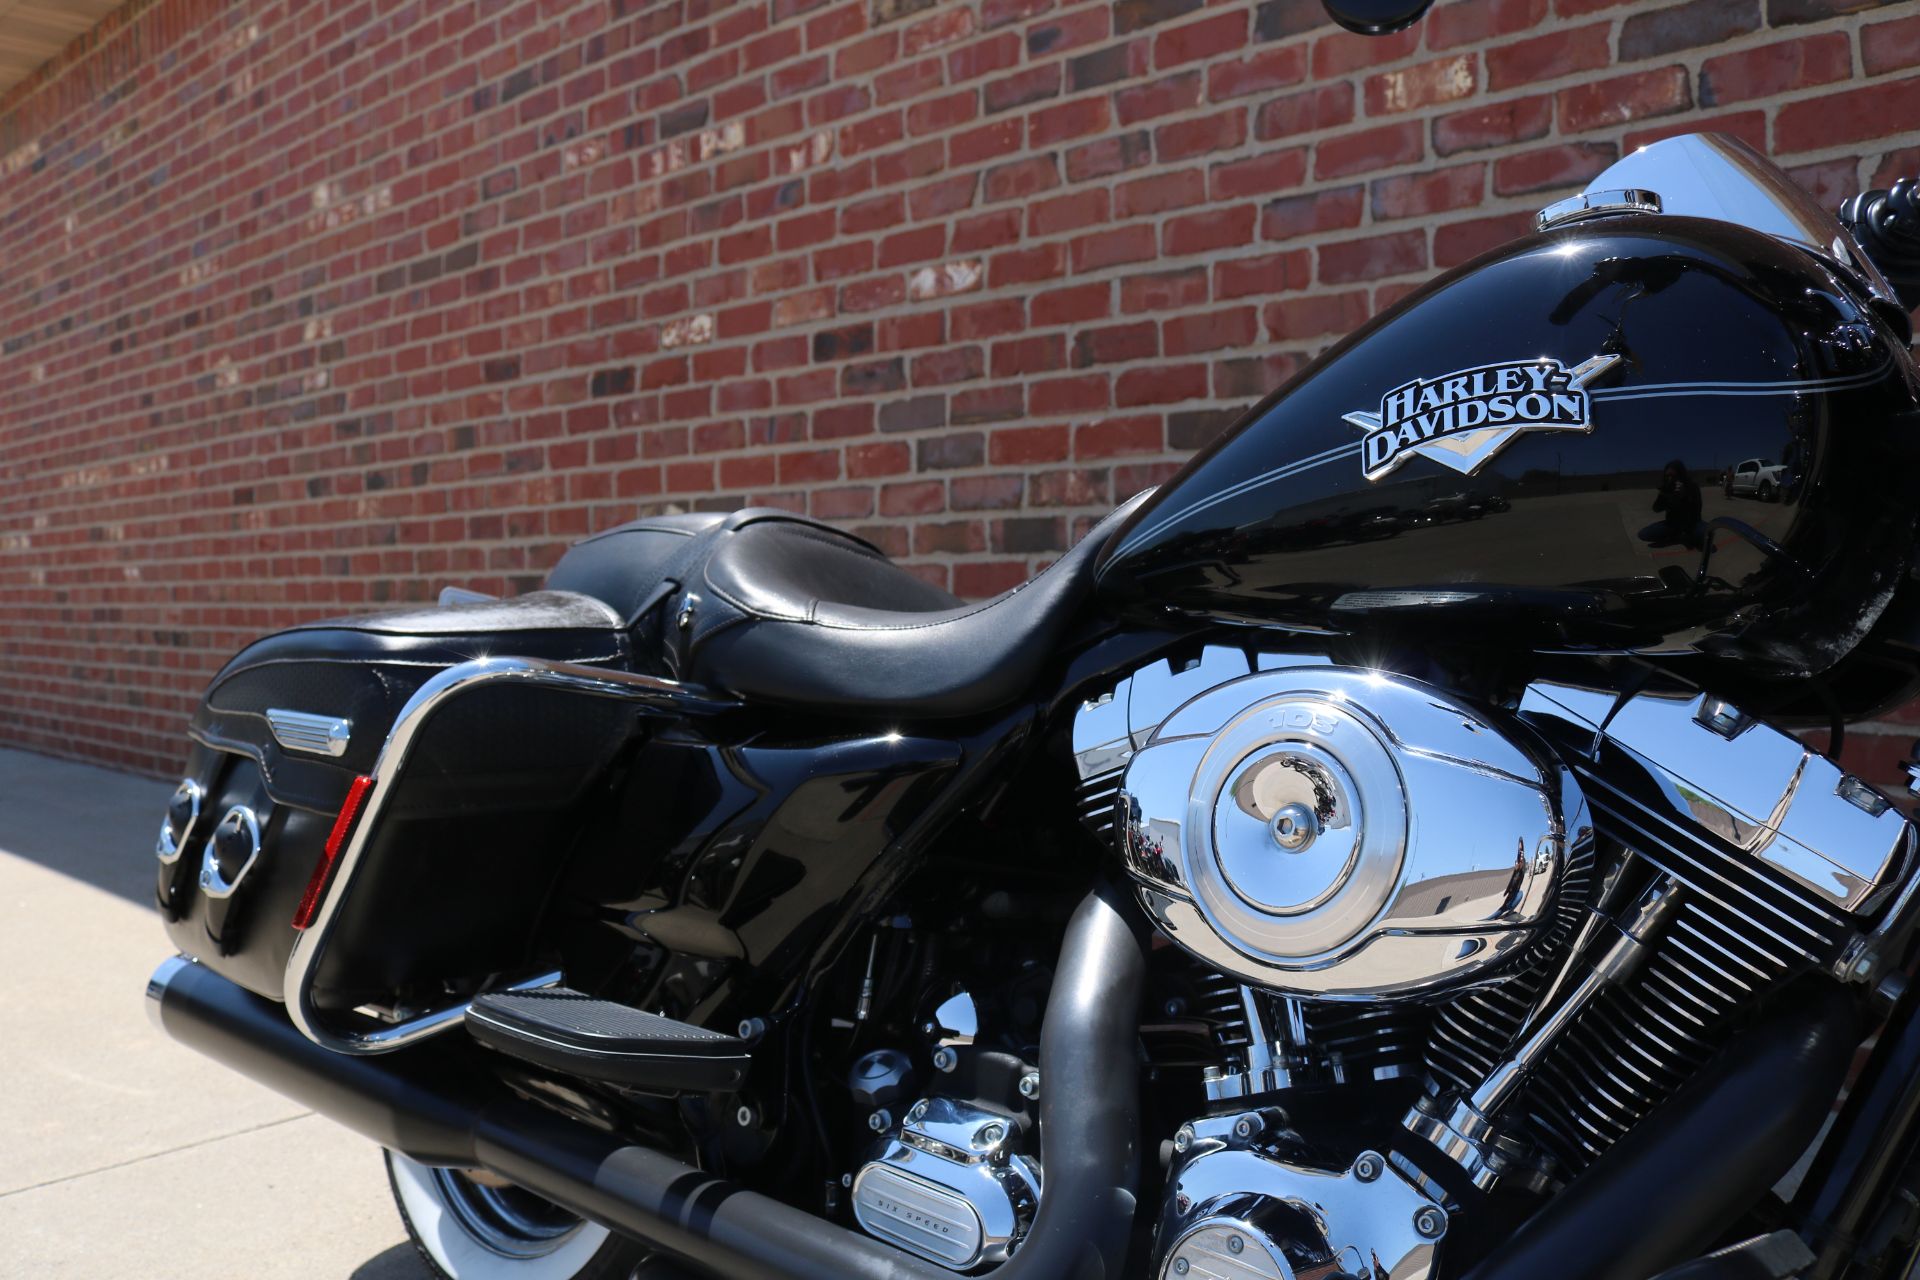 2011 Harley-Davidson Road King® Classic in Ames, Iowa - Photo 9